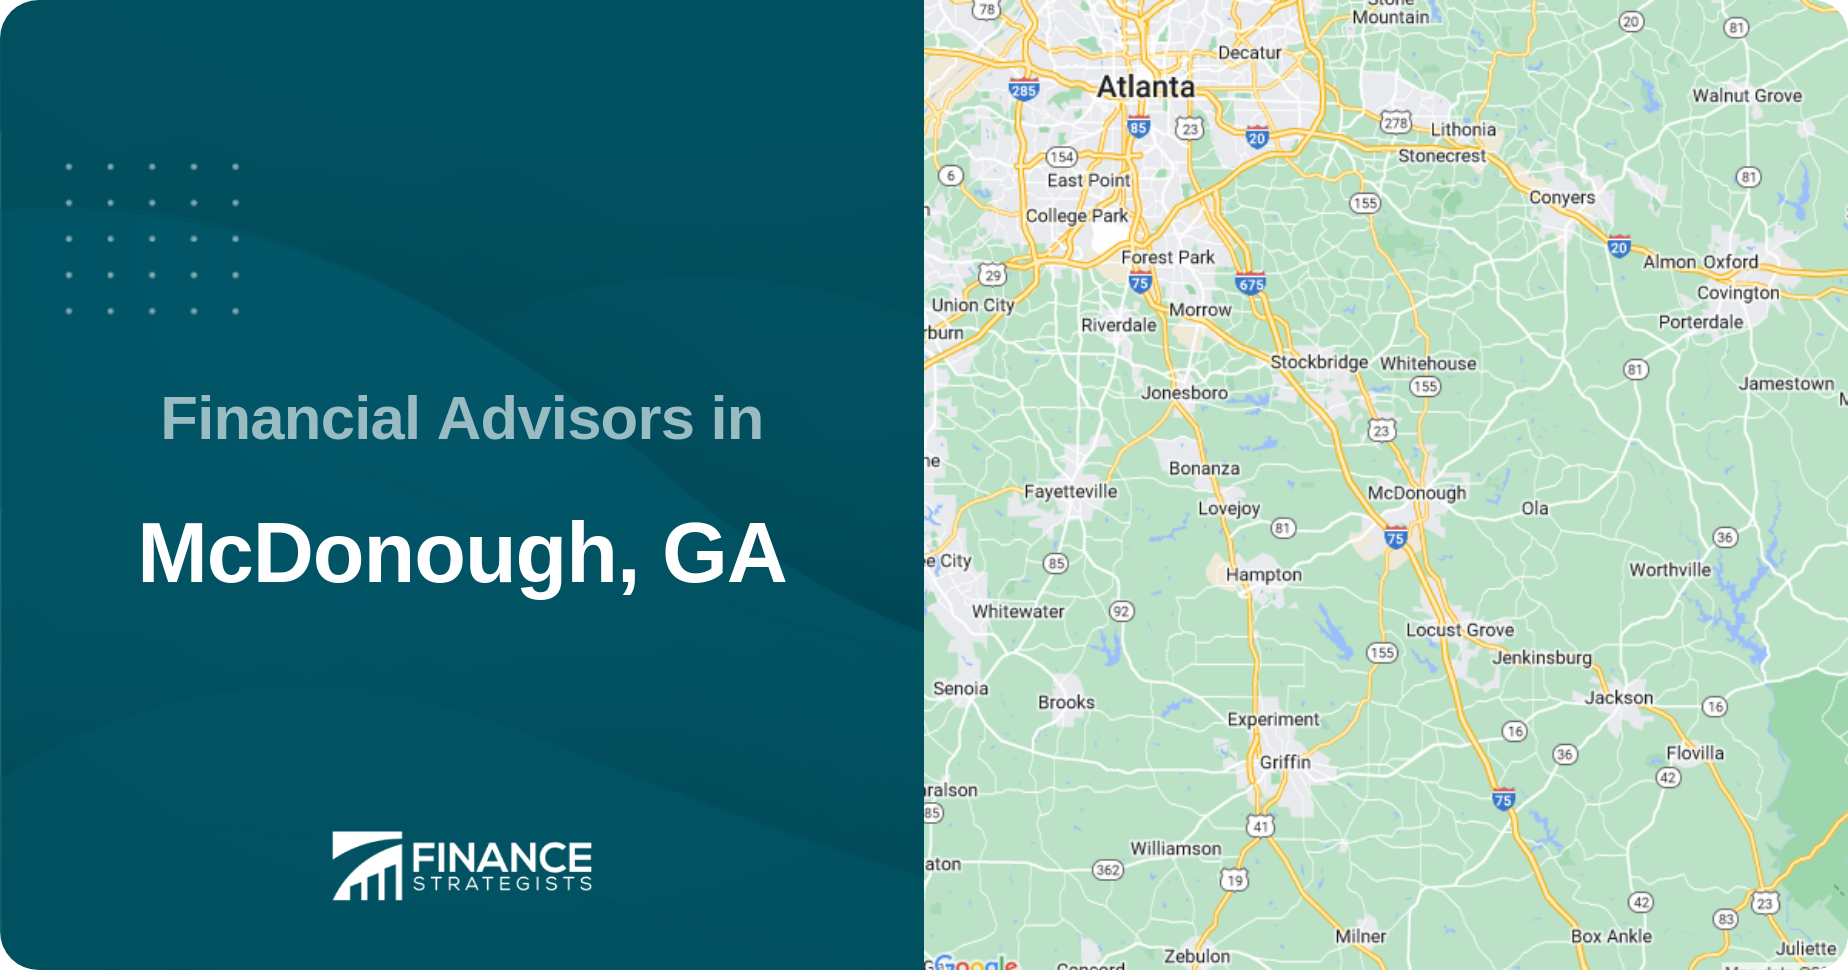 Financial Advisors in McDonough, GA